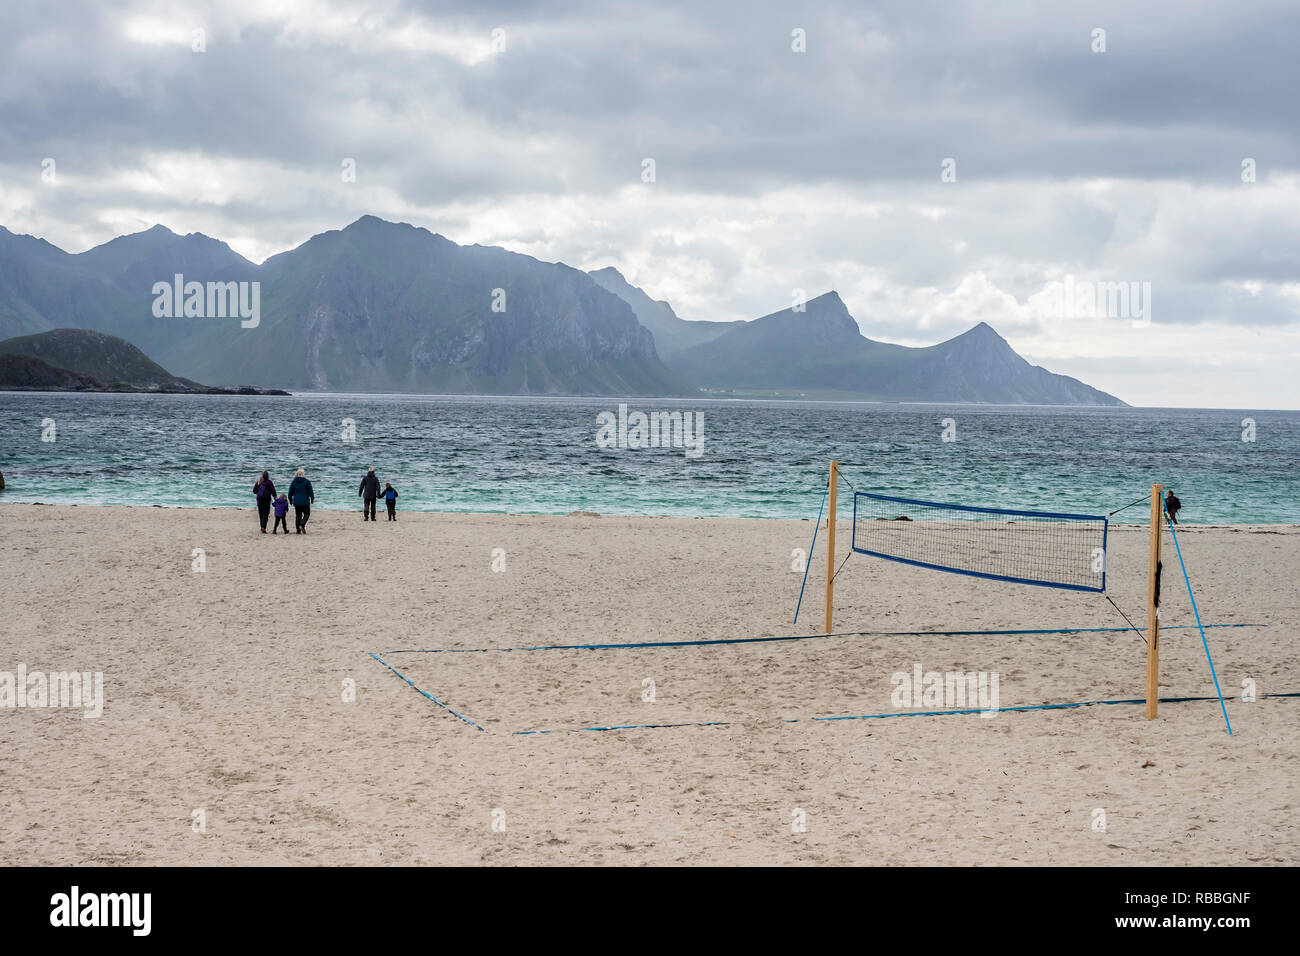 Hauklandstranda, Haukland, spiaggia sabbiosa, pallavolo net, beachvolleyball, isola Vestvagöy, Lofoten, Norvegia Foto Stock